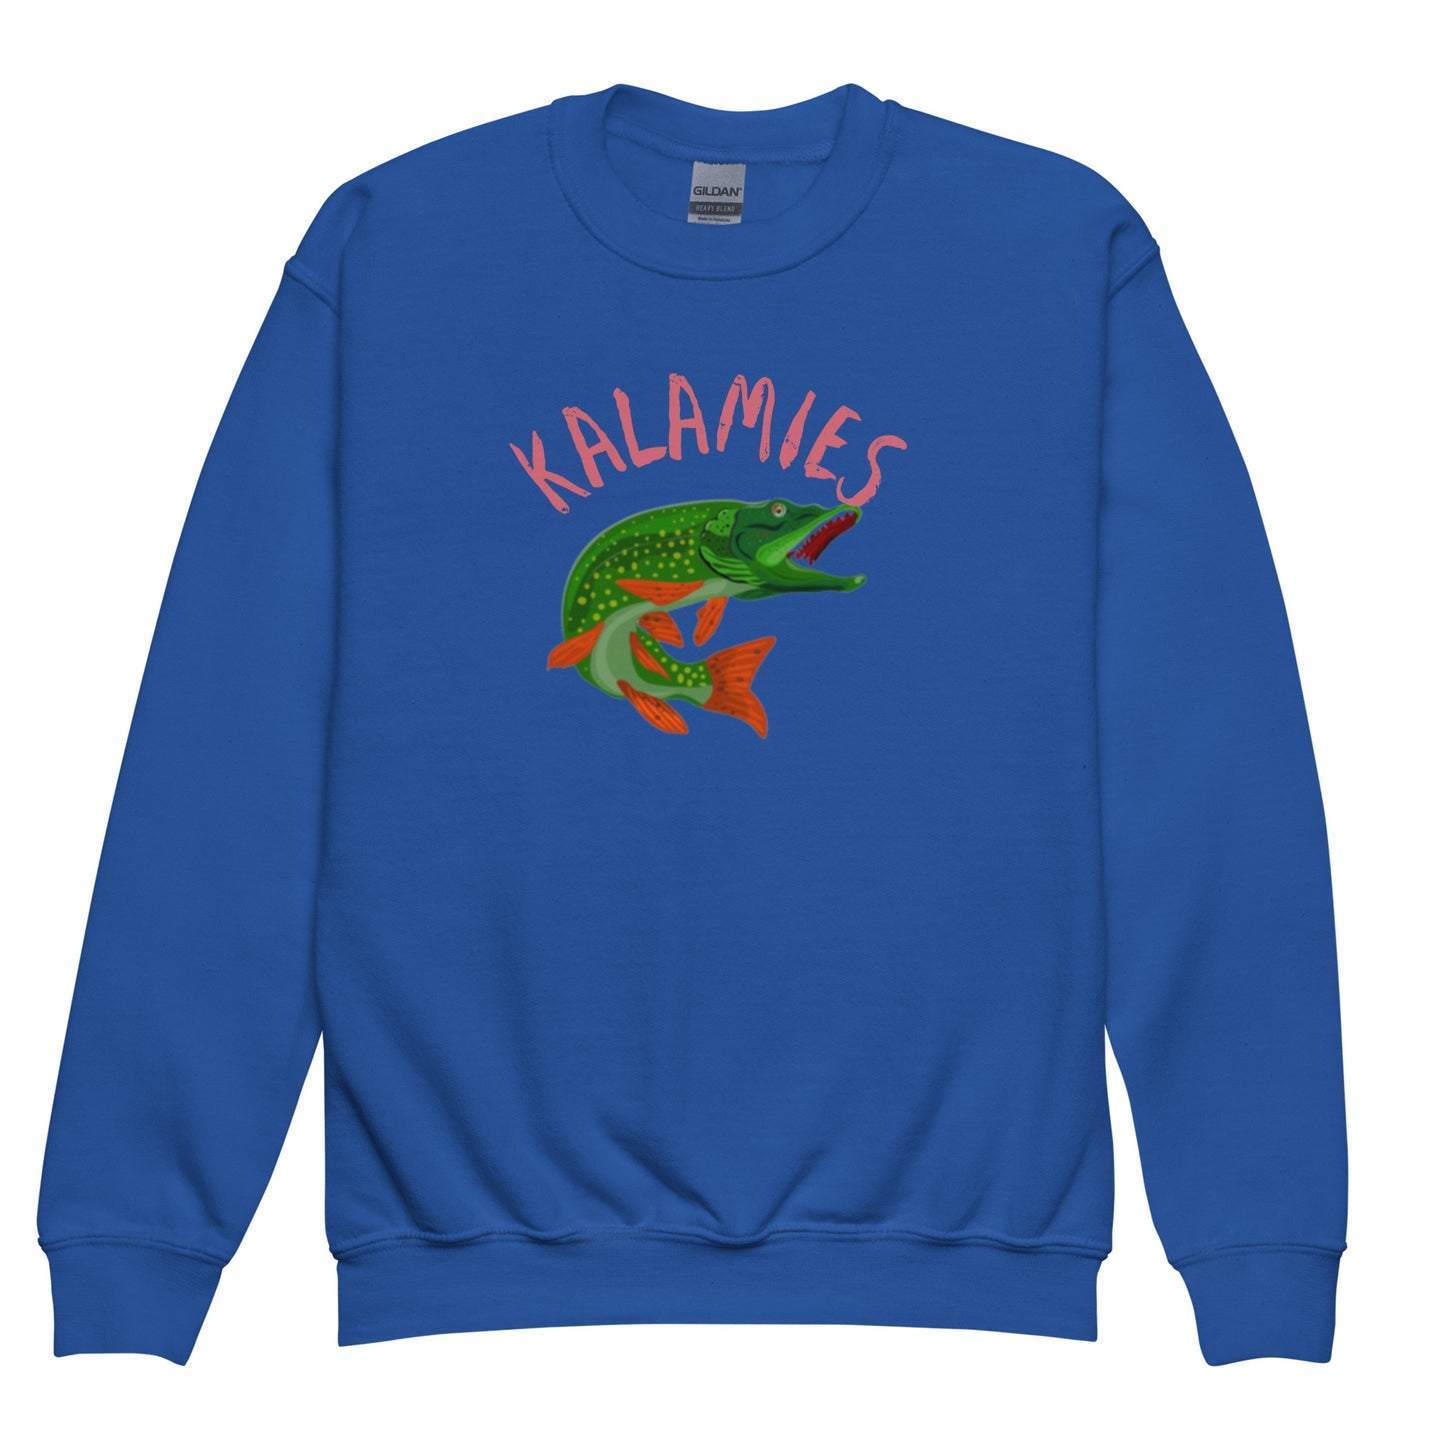 "Kalamies" children's hooded sweatshirt